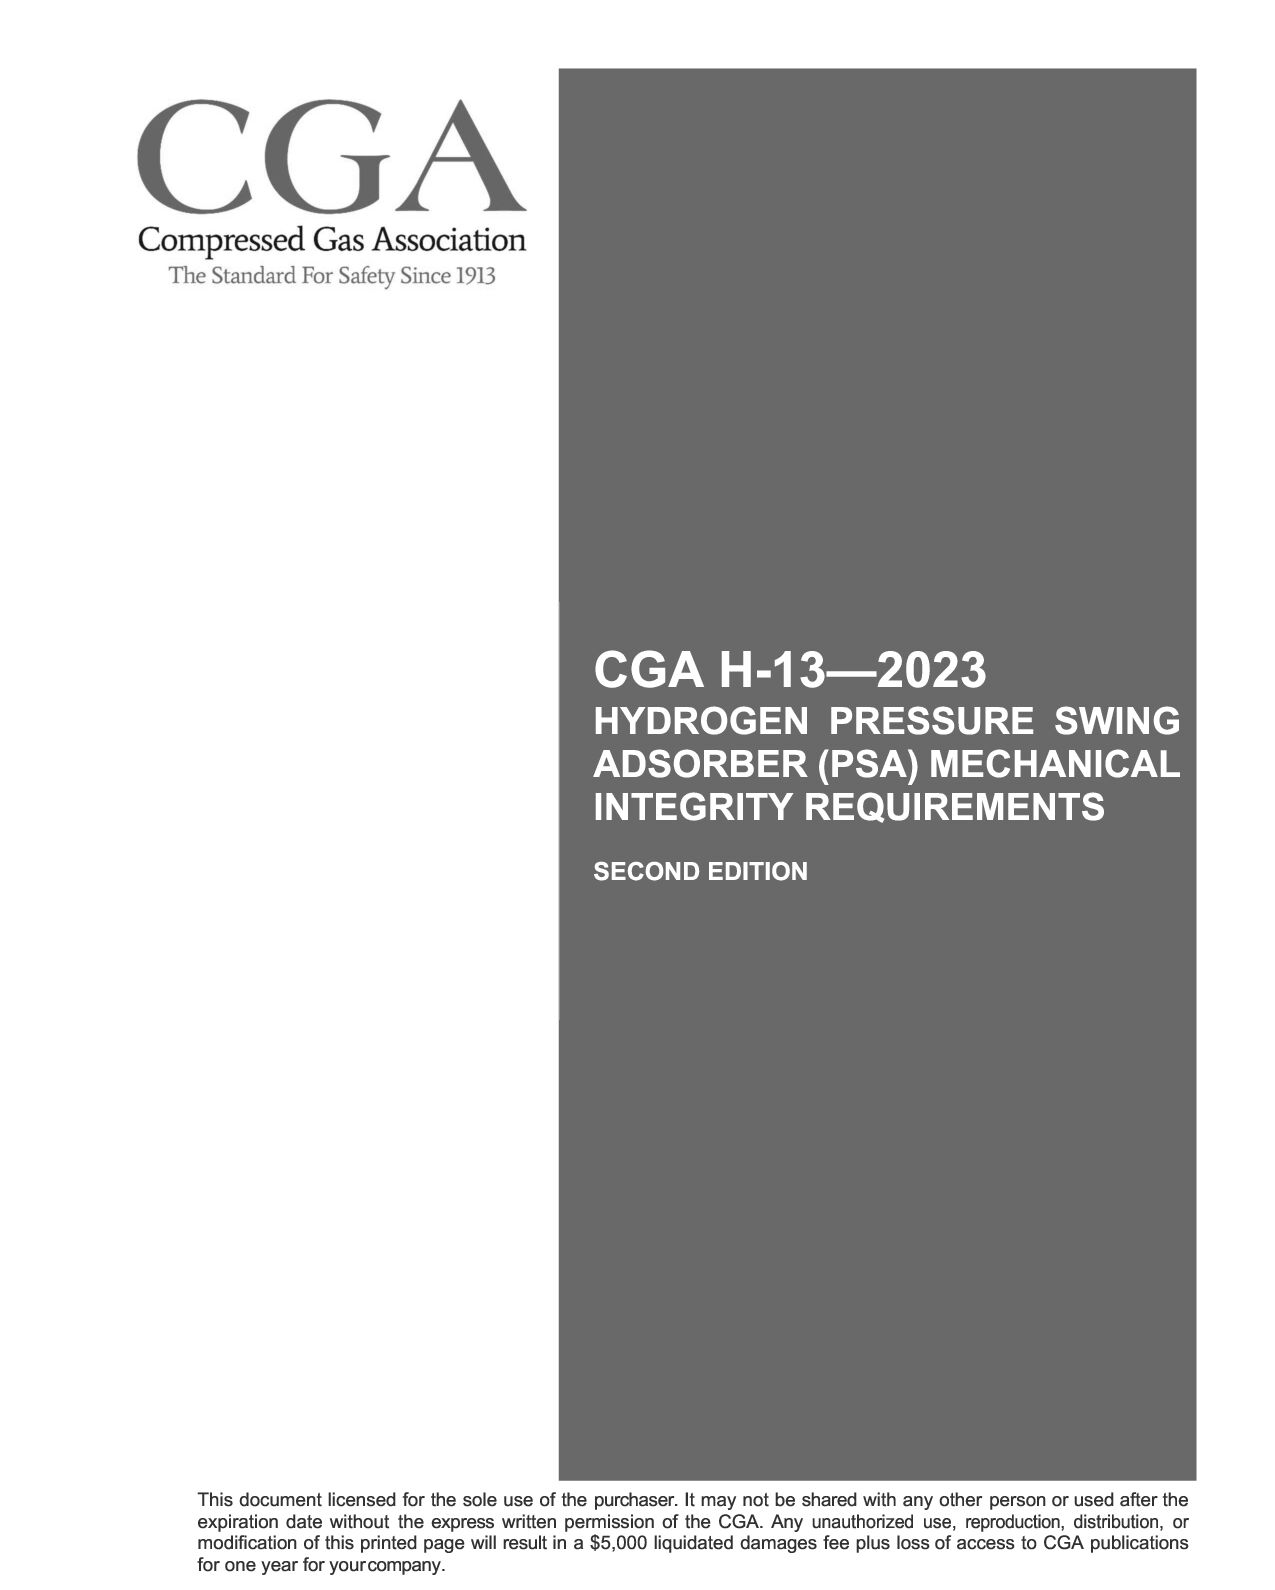 CGA H-13-2023